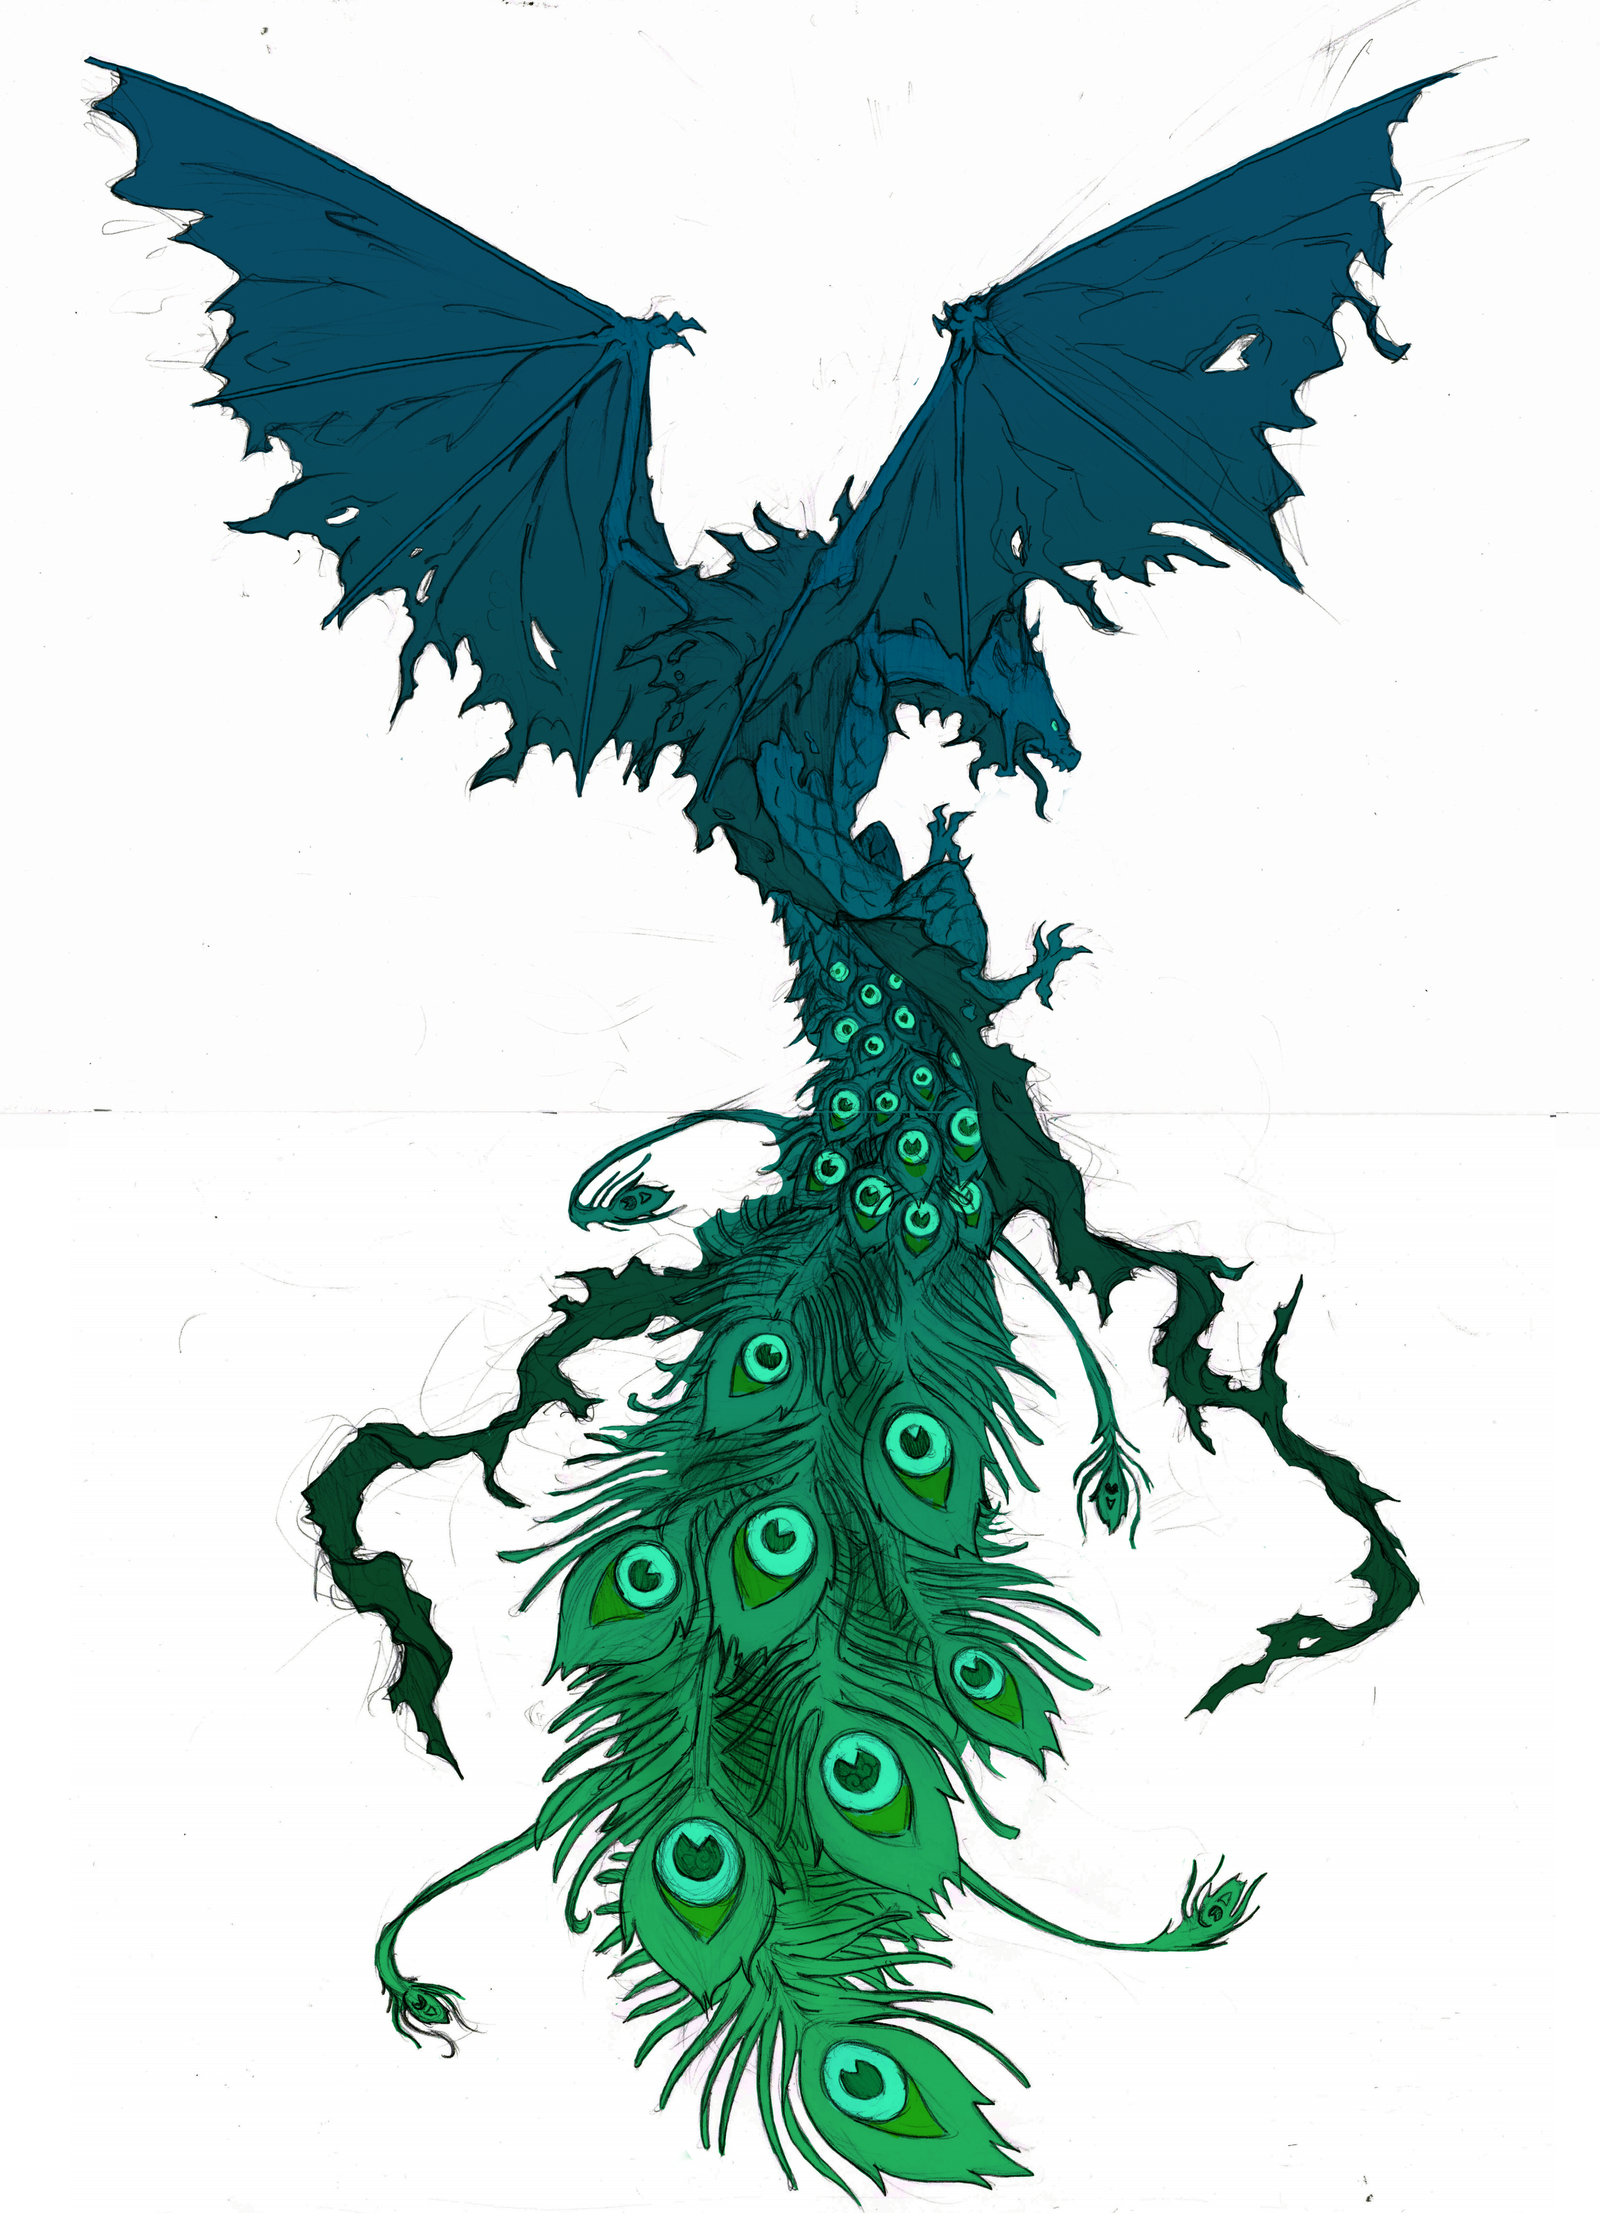 Unique green peacock dragon tattoo design by Kotoraptor